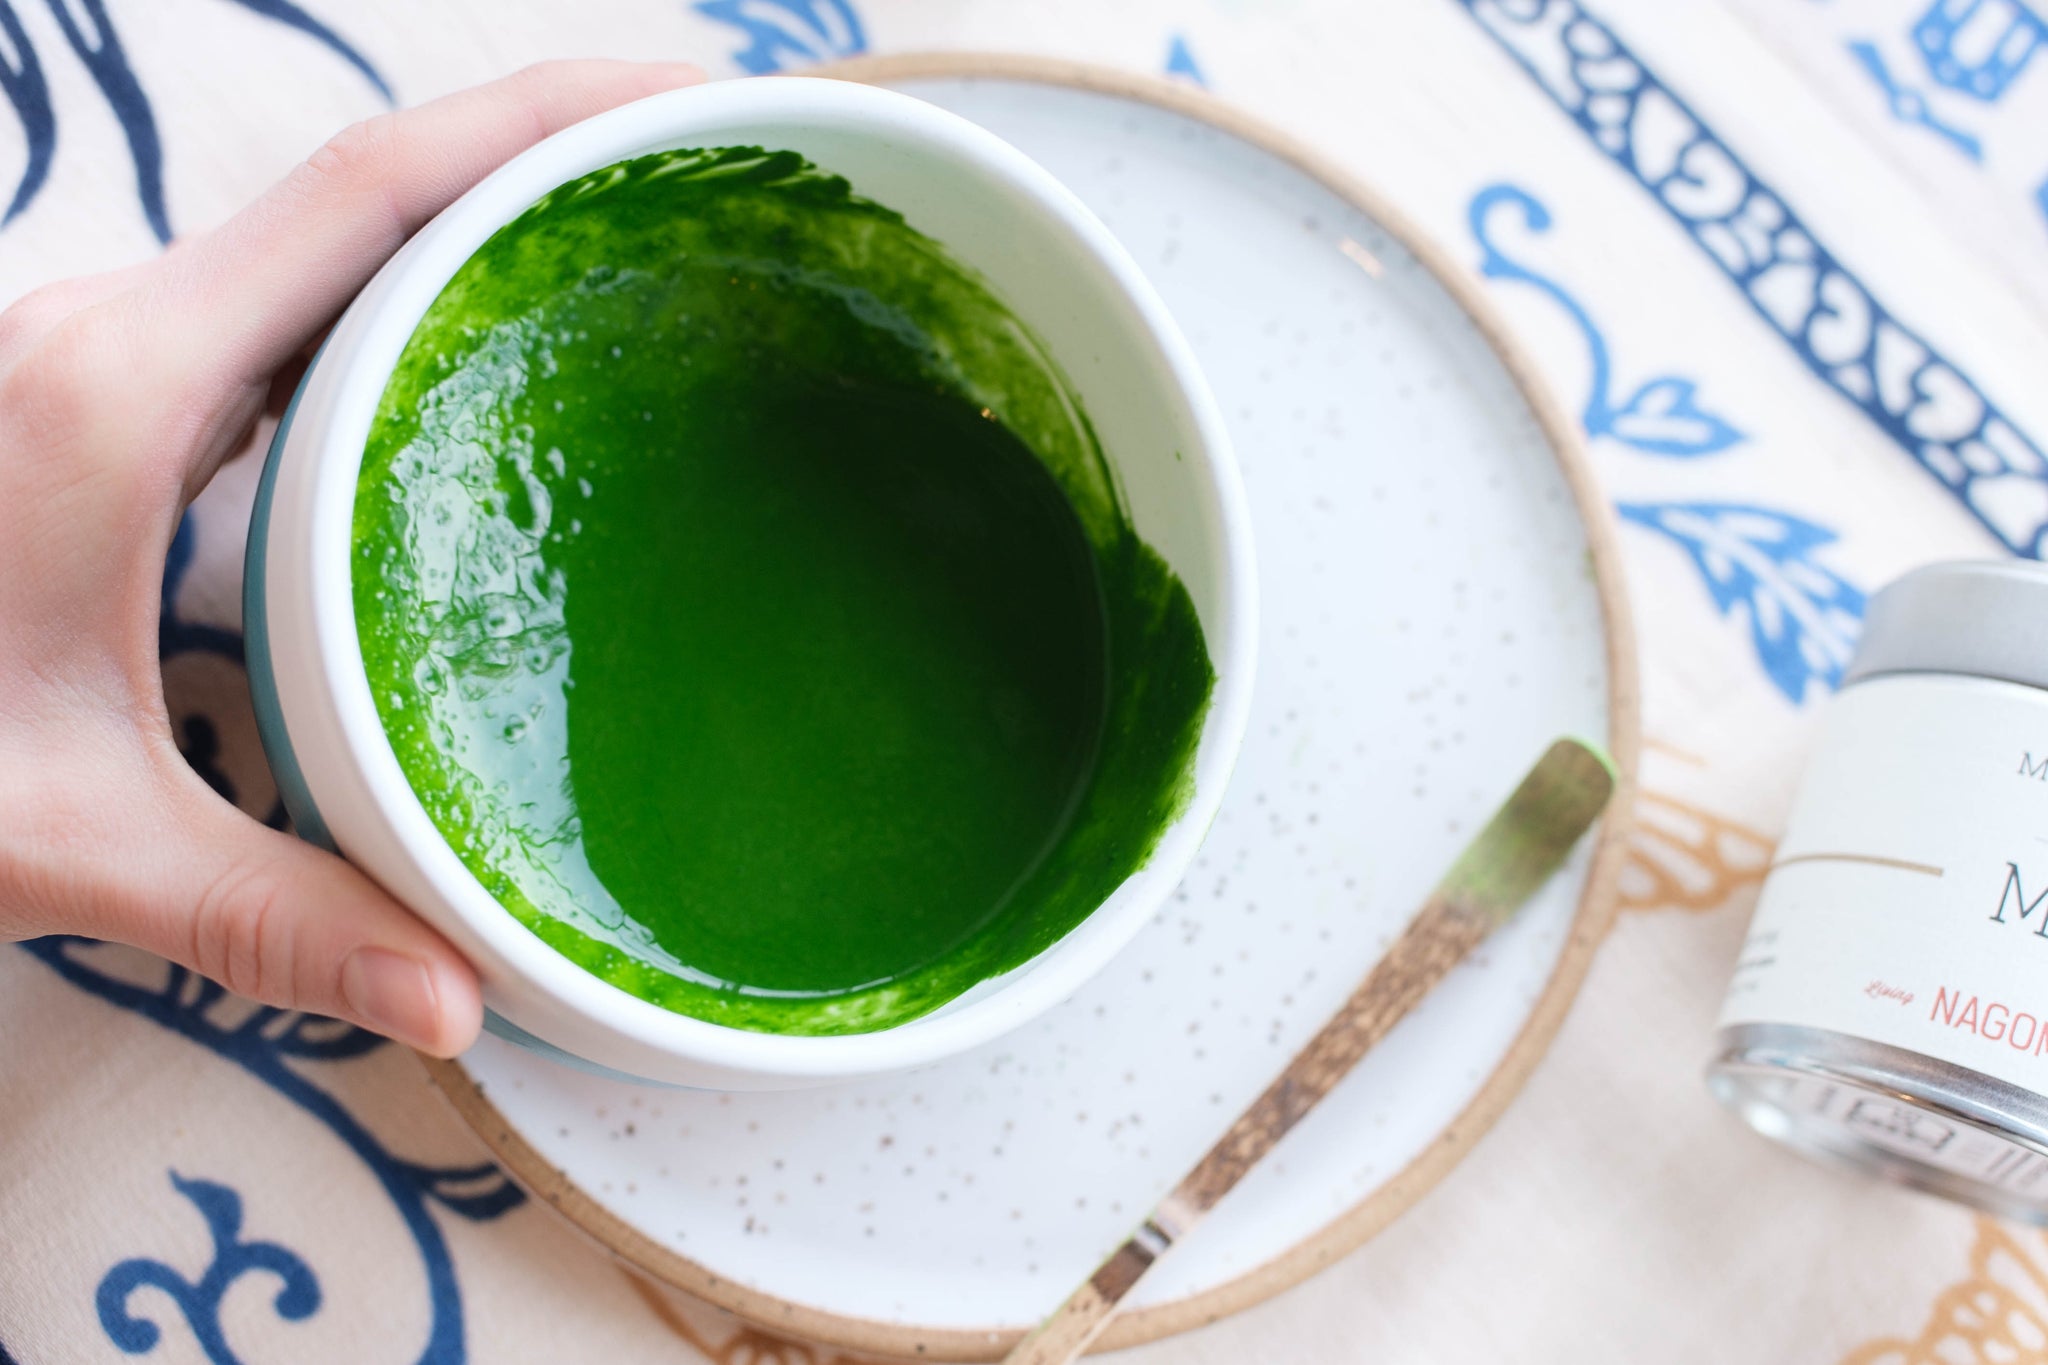 Koicha Mizuba Matcha green tea